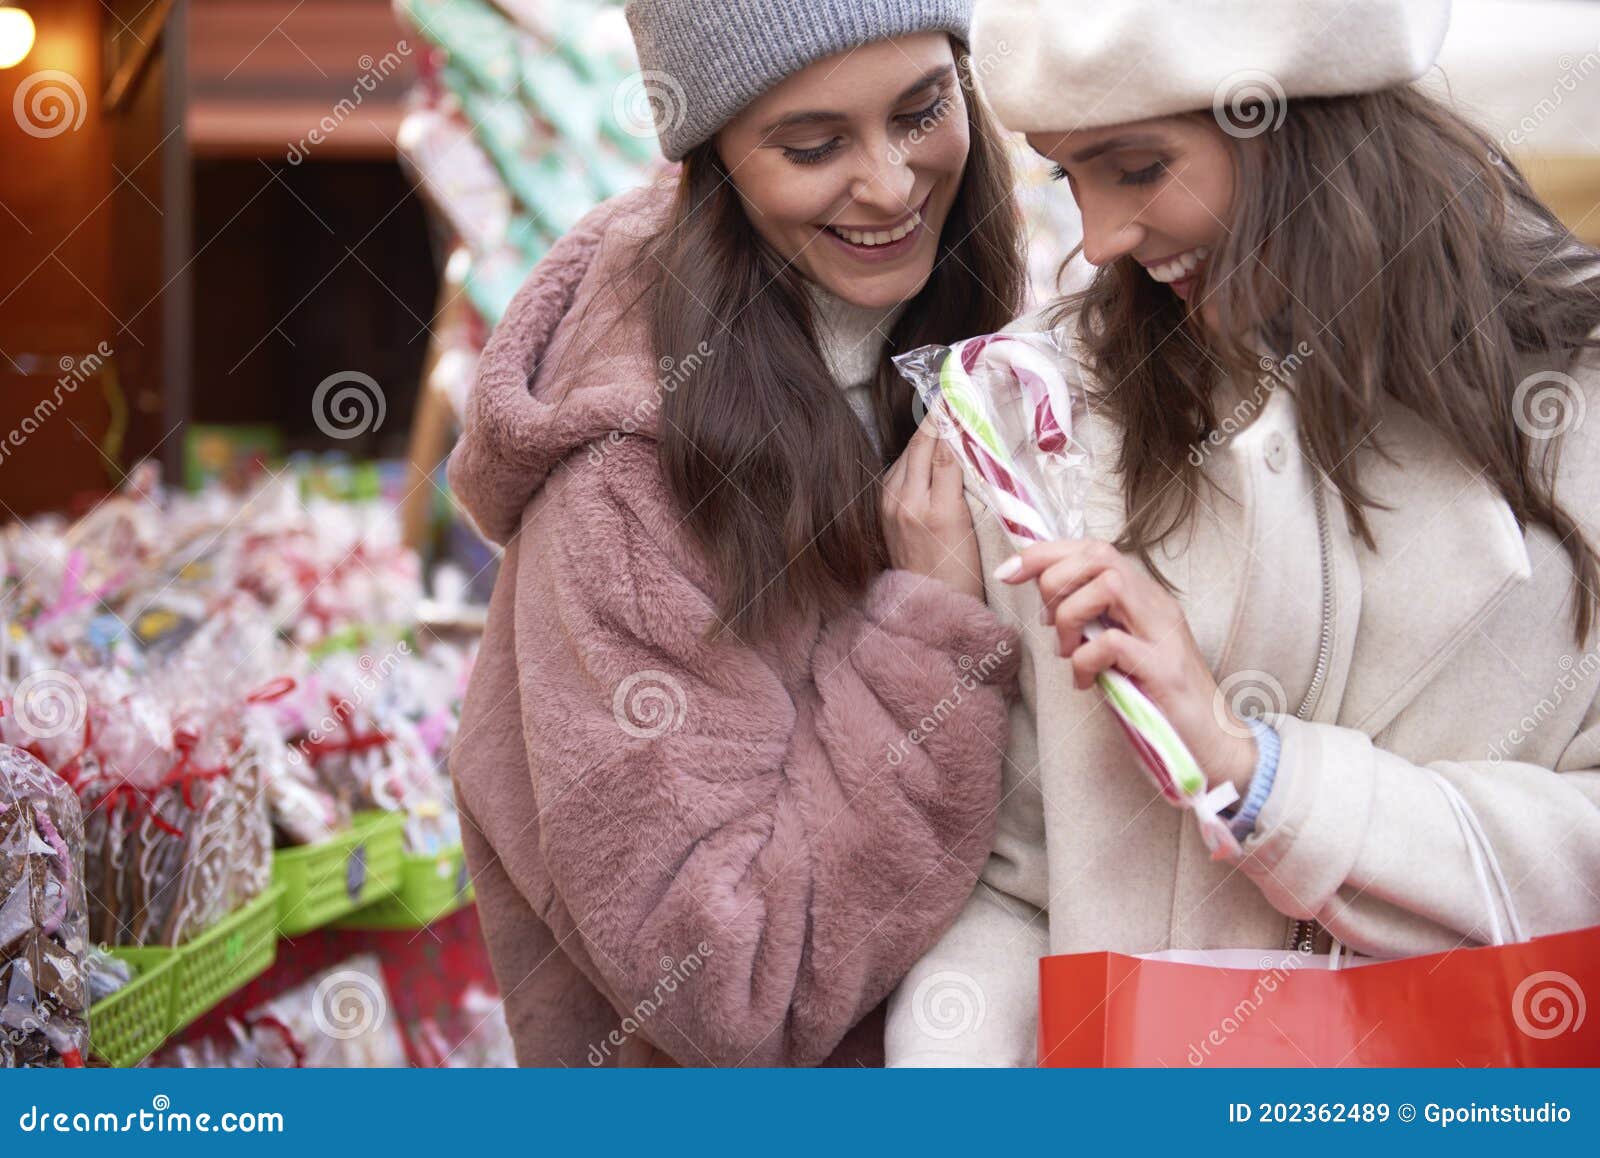 Two Women Buying Candy Cane on Christmas Market Stock Image - Image of ...